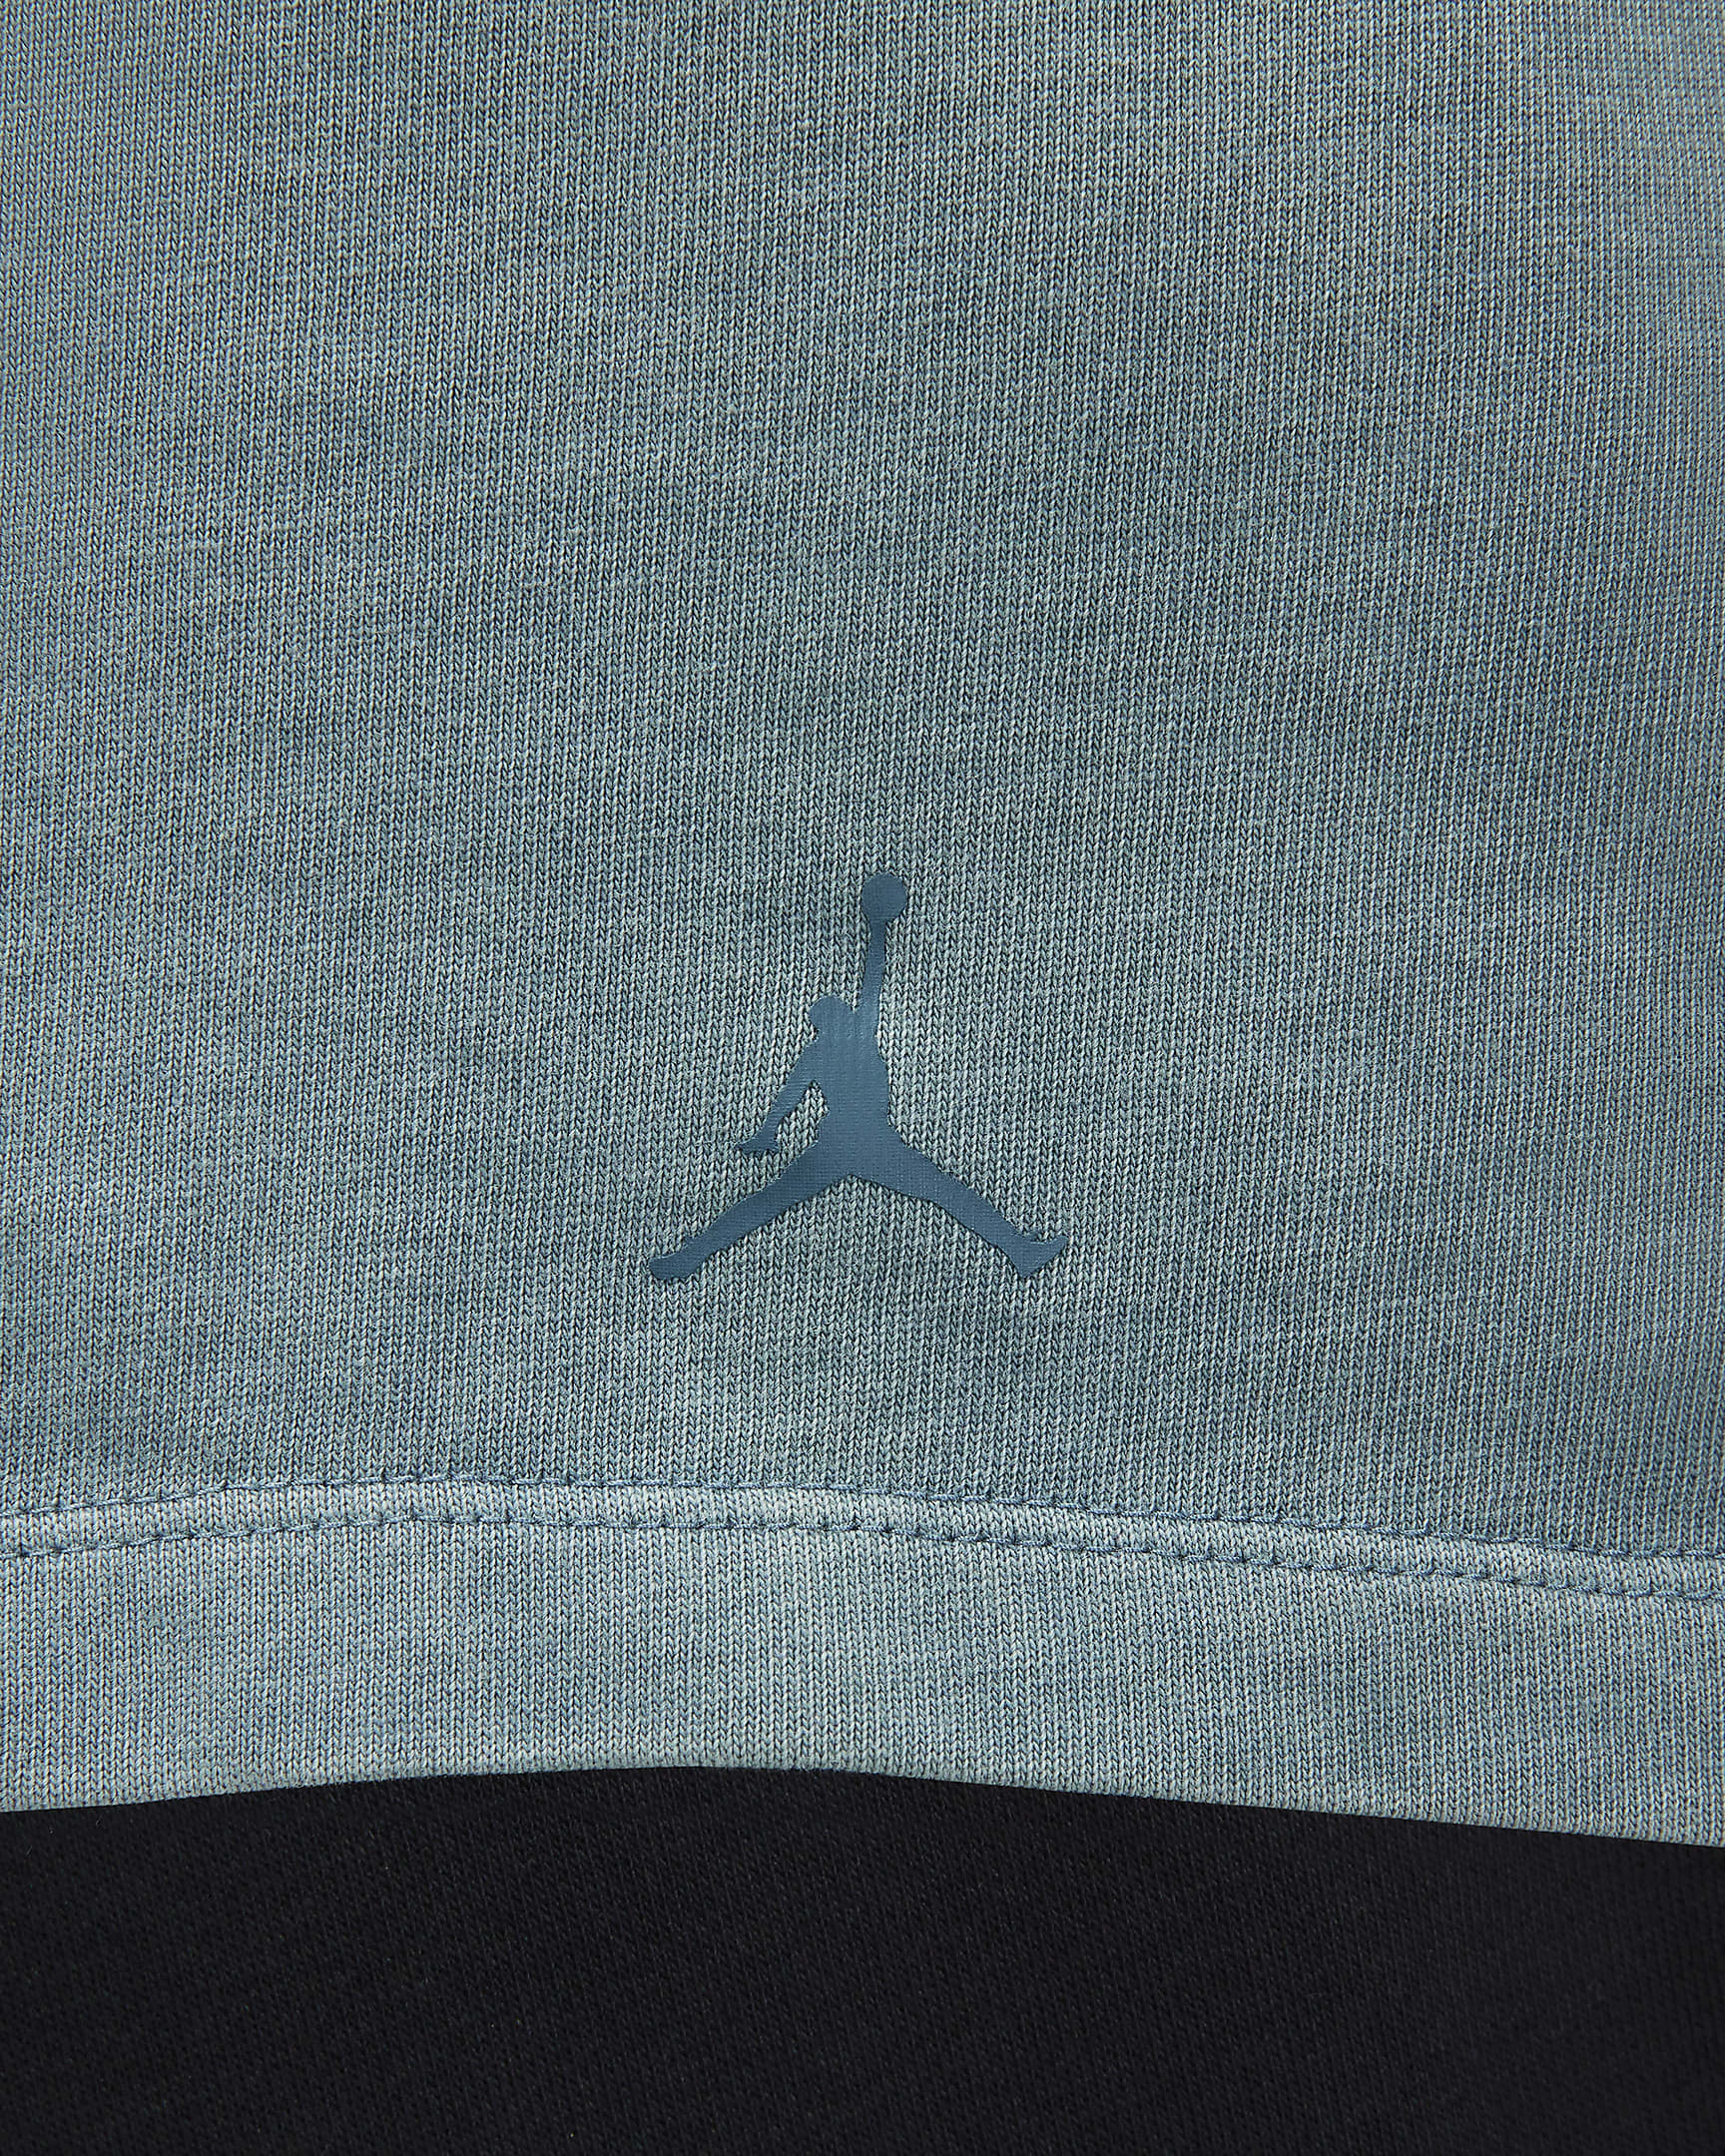 Jordan (Her)itage Women's Graphic T-Shirt (Plus Size). Nike SK